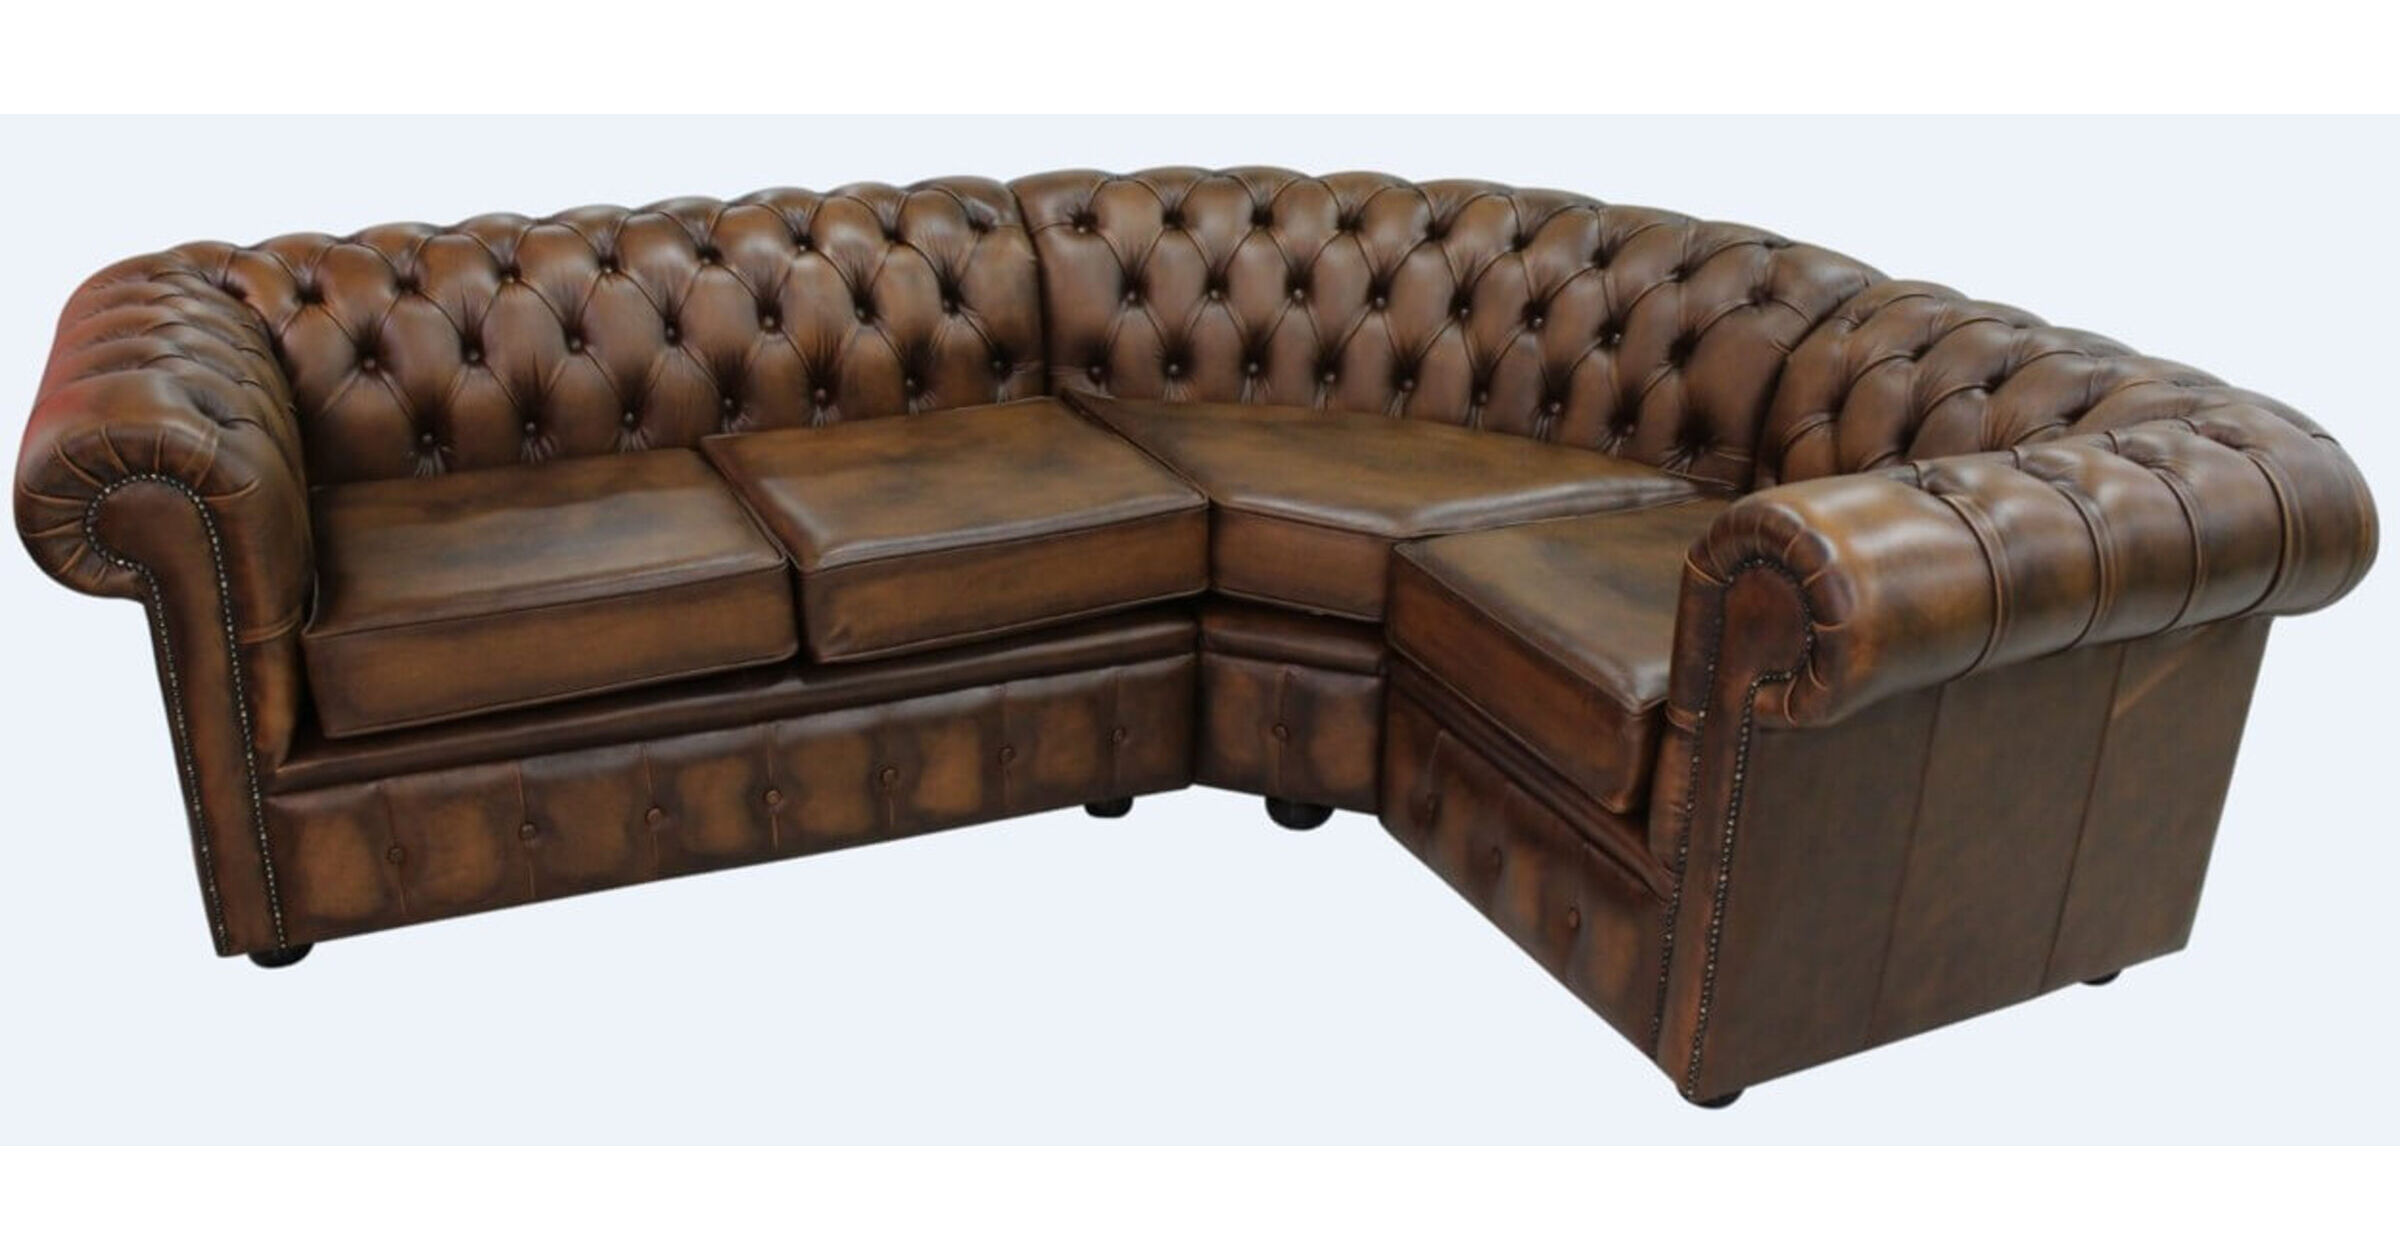 leather chesterfield corner sofa uk